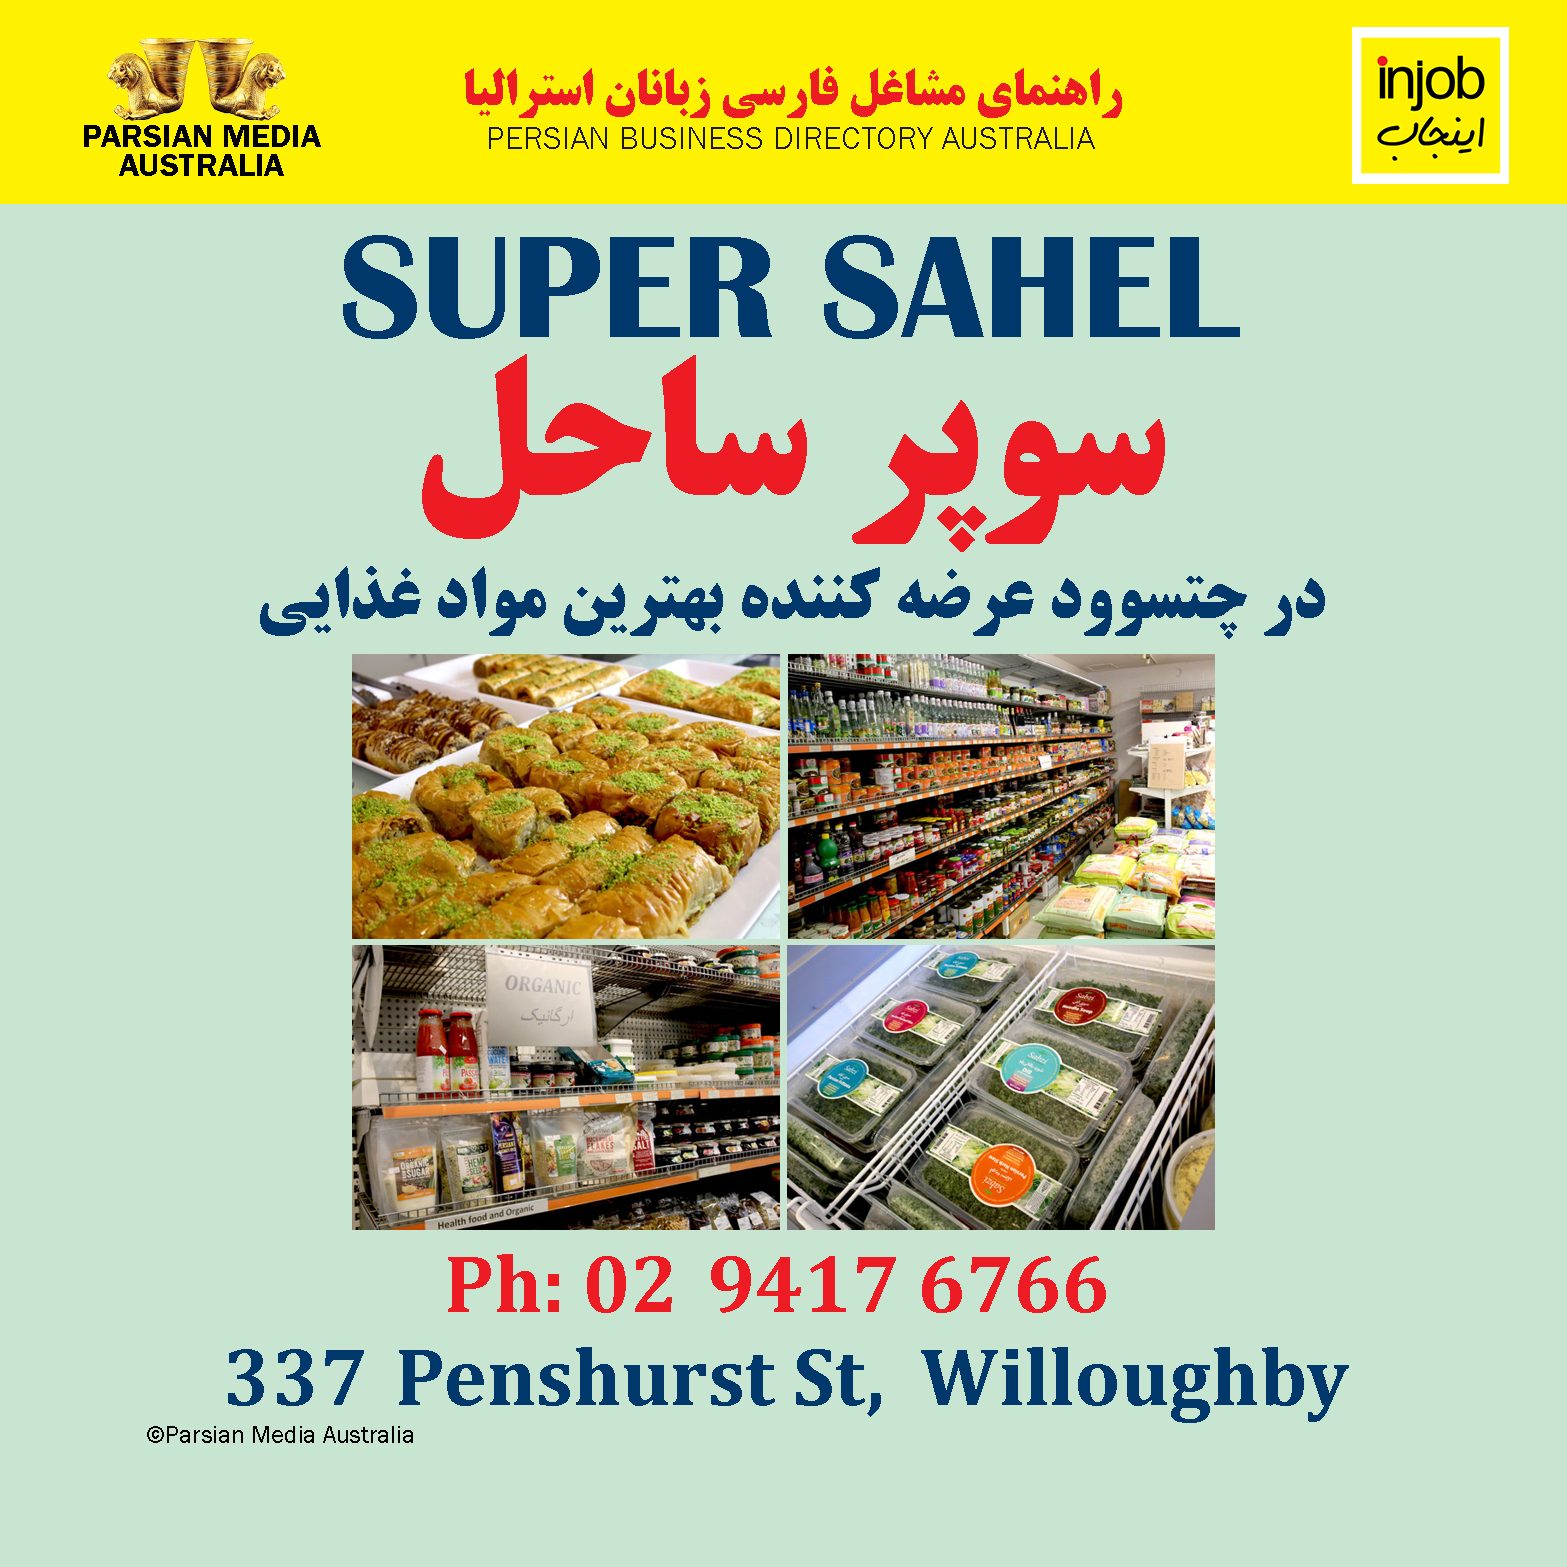 Sahel-Supermarket-Injob-2021-icon.jpg